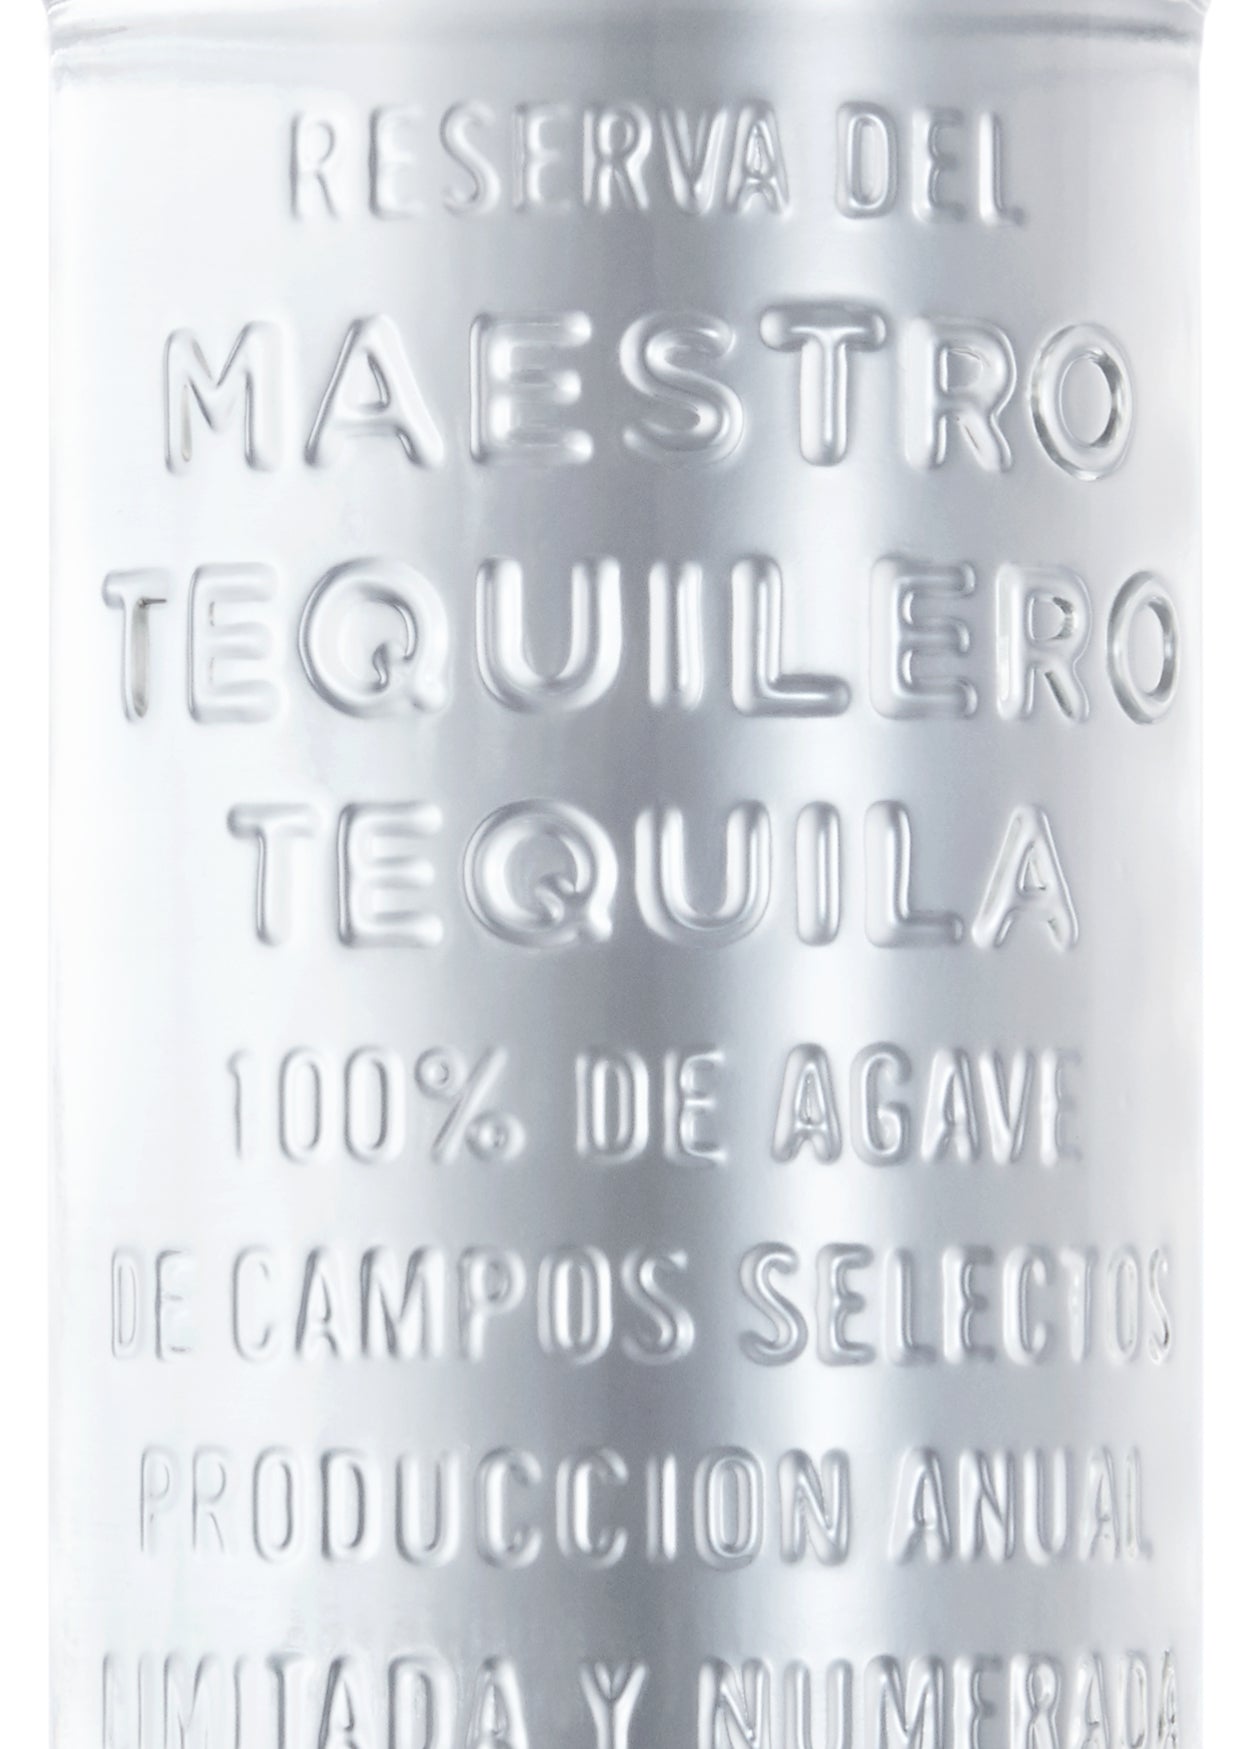 Maestro Dobel Diamante Tequila 38% vol. 700ml